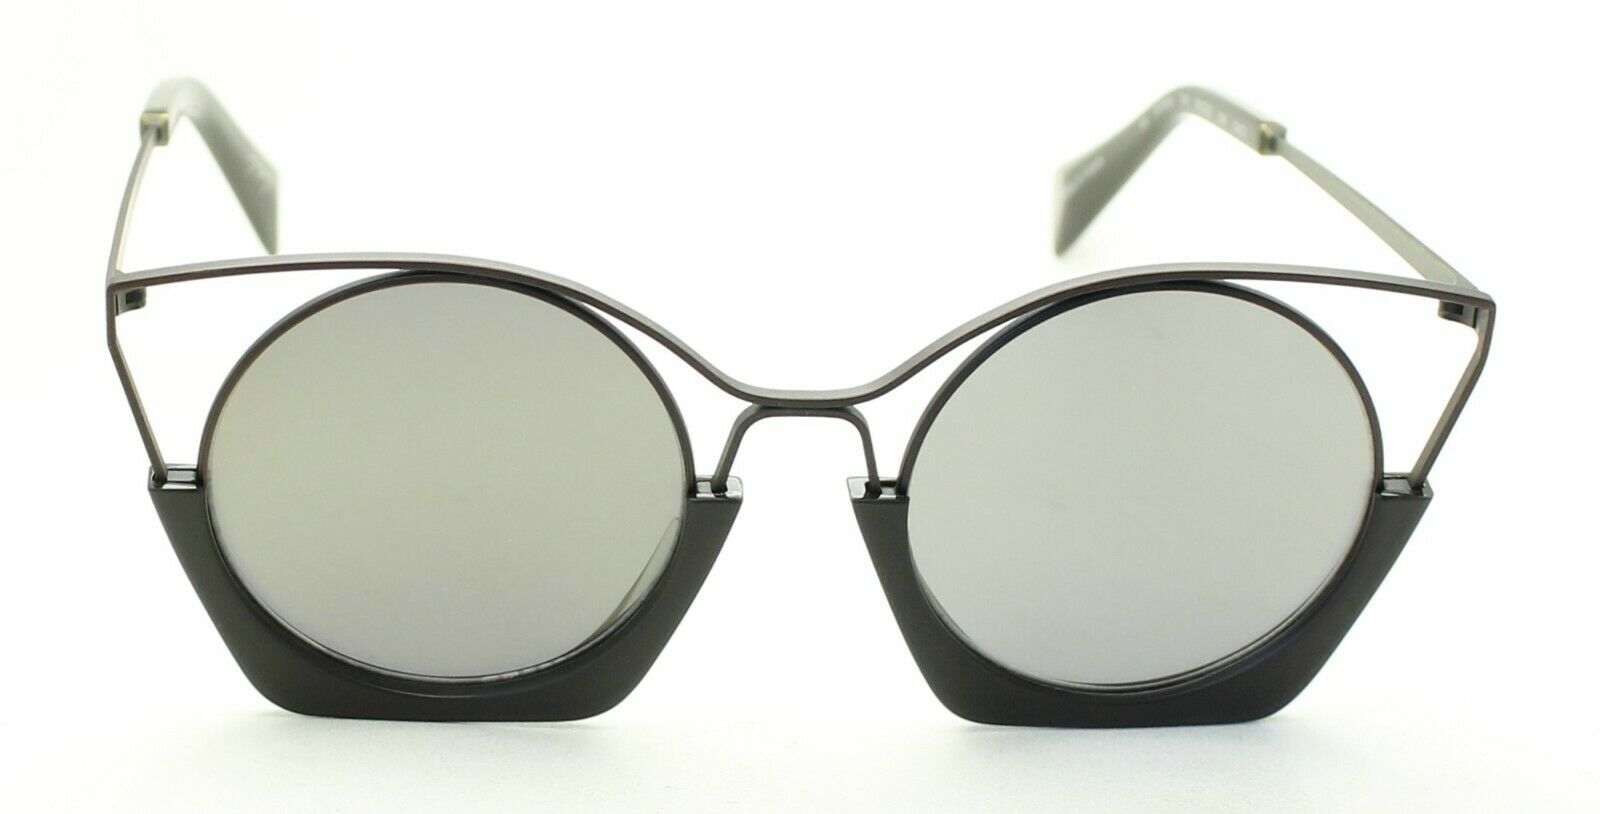 YOHJI YAMAMOTO YY7016 115 CAT 3 51mm Sunglasses Eyewear Shades Frames - France